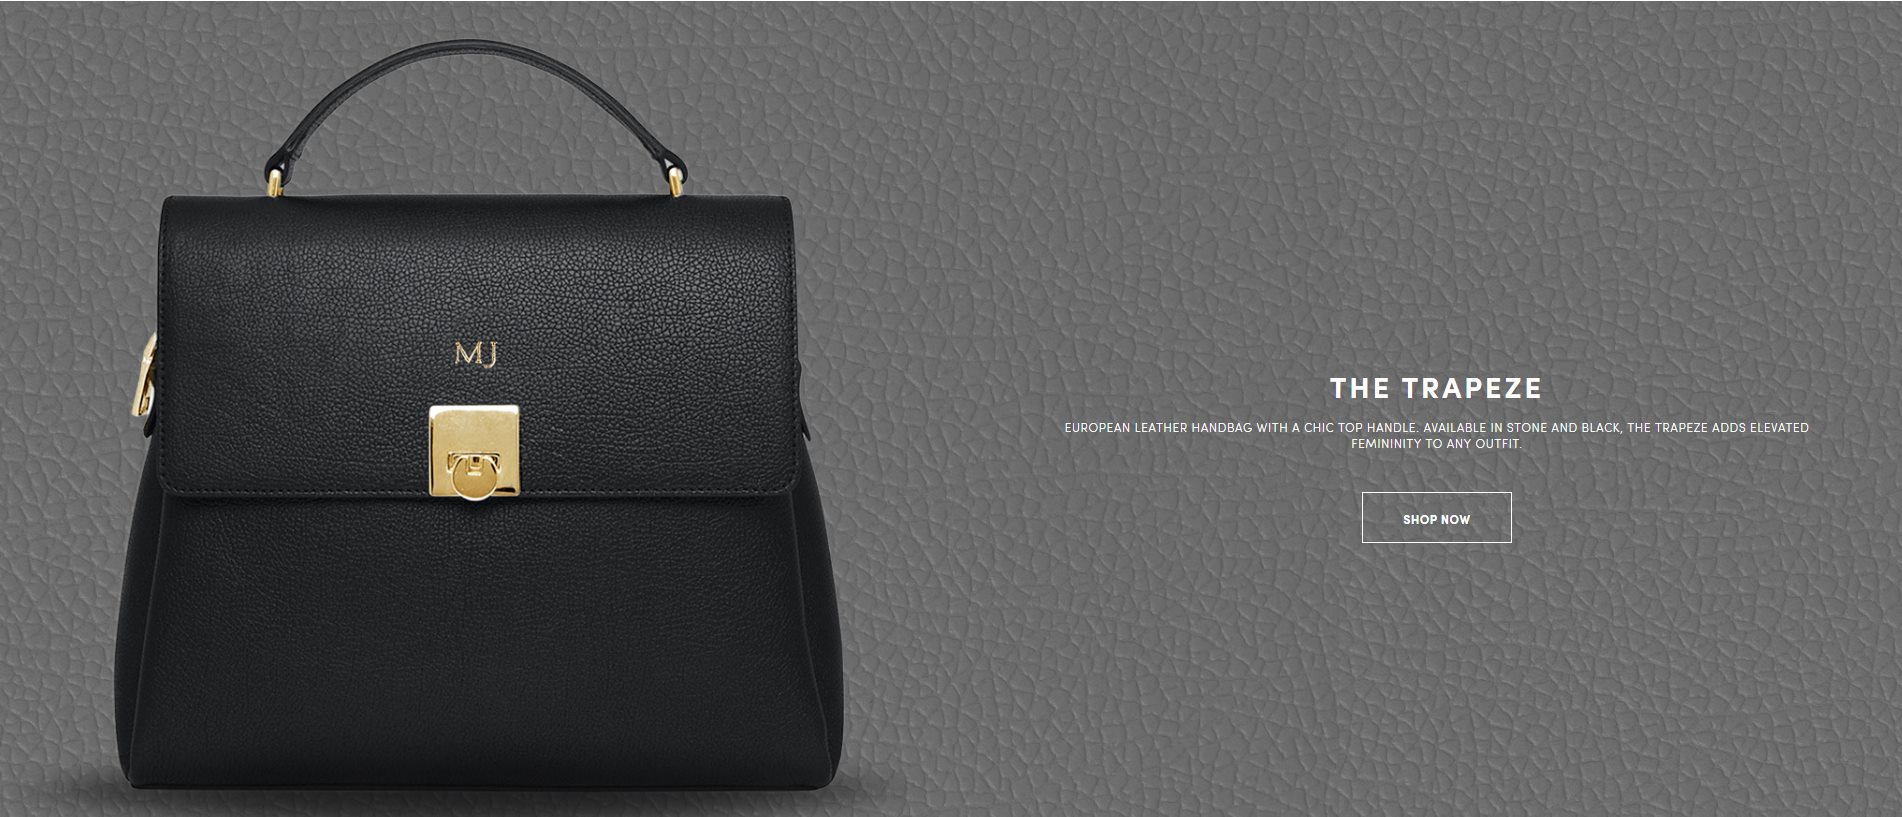 Leather Top Handle Bag, Blackberry Leather Handbag Top Handle, Women's  Leather Bag KF-1369 - Etsy